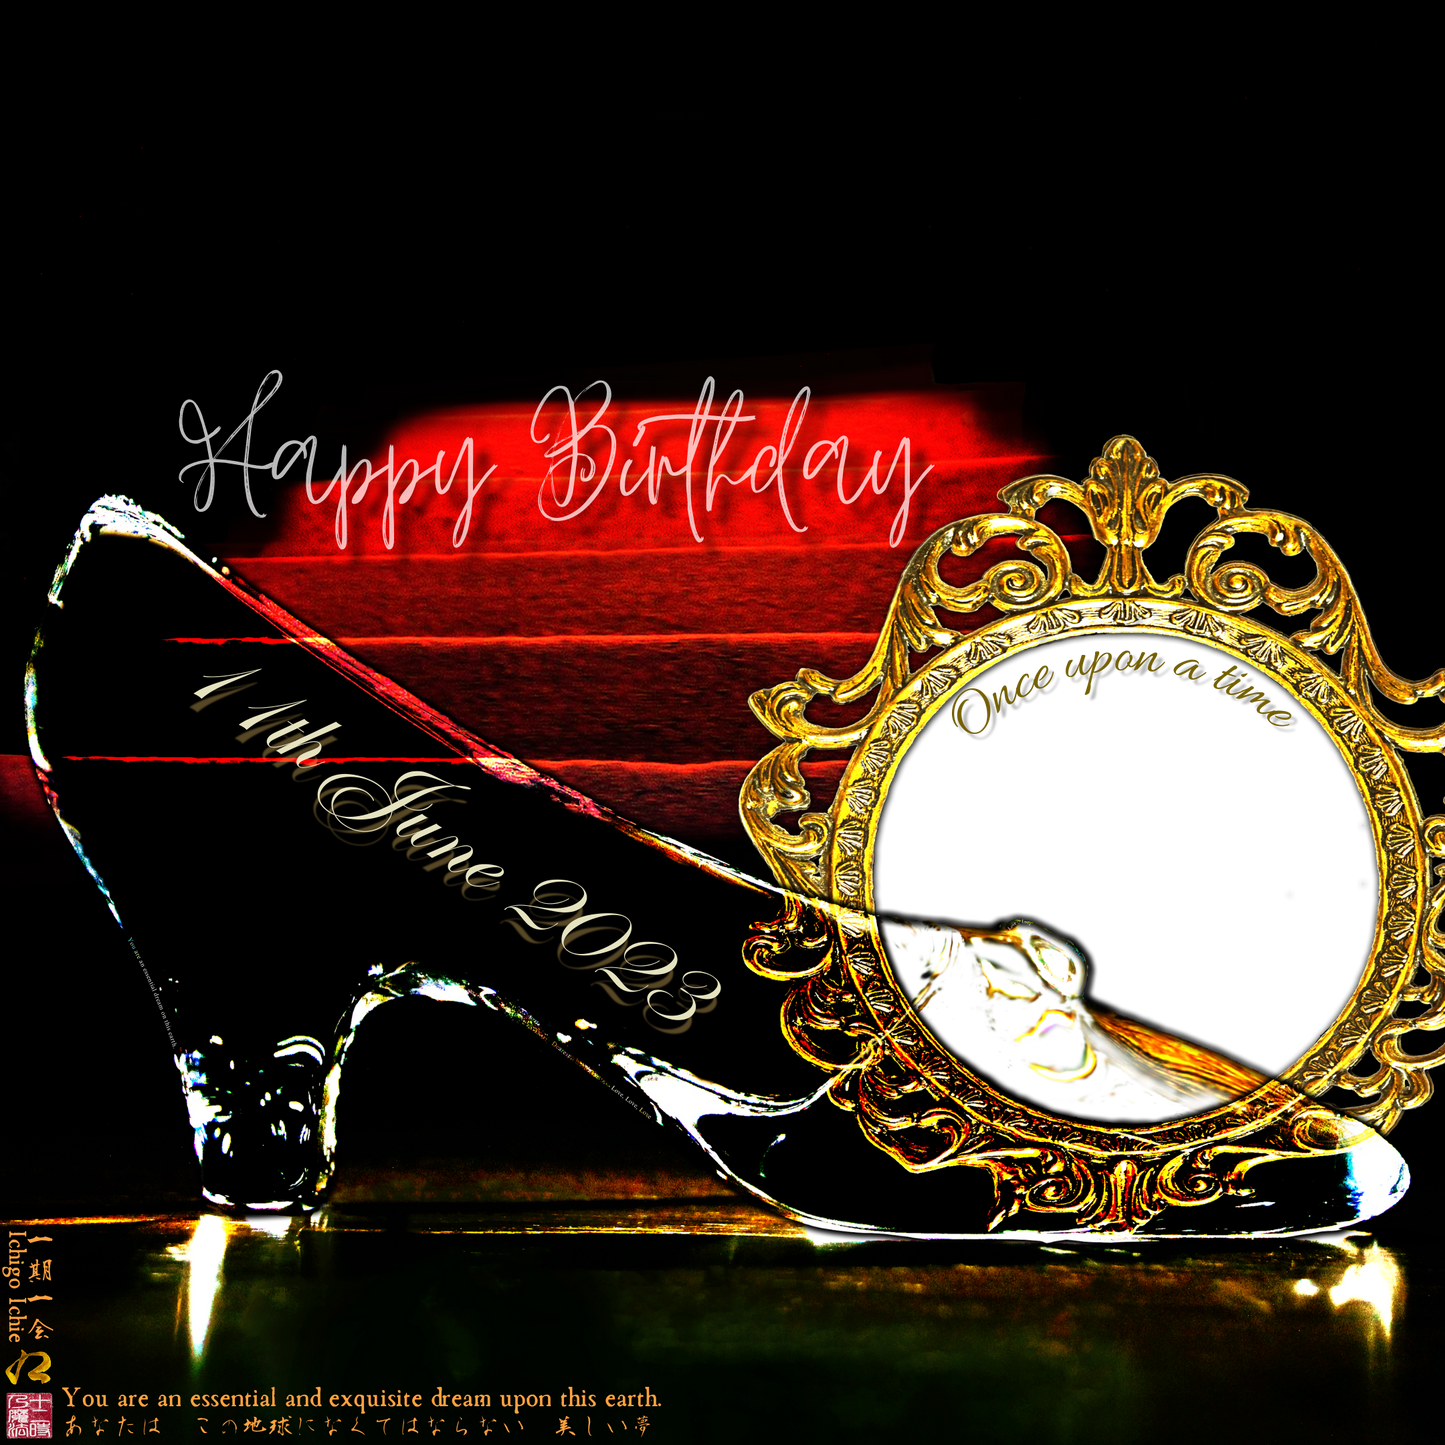 Happy Birthday Glass Slipper "Ichigo Ichie" 11th June 2023 the Right (1-of-1) NFT Art